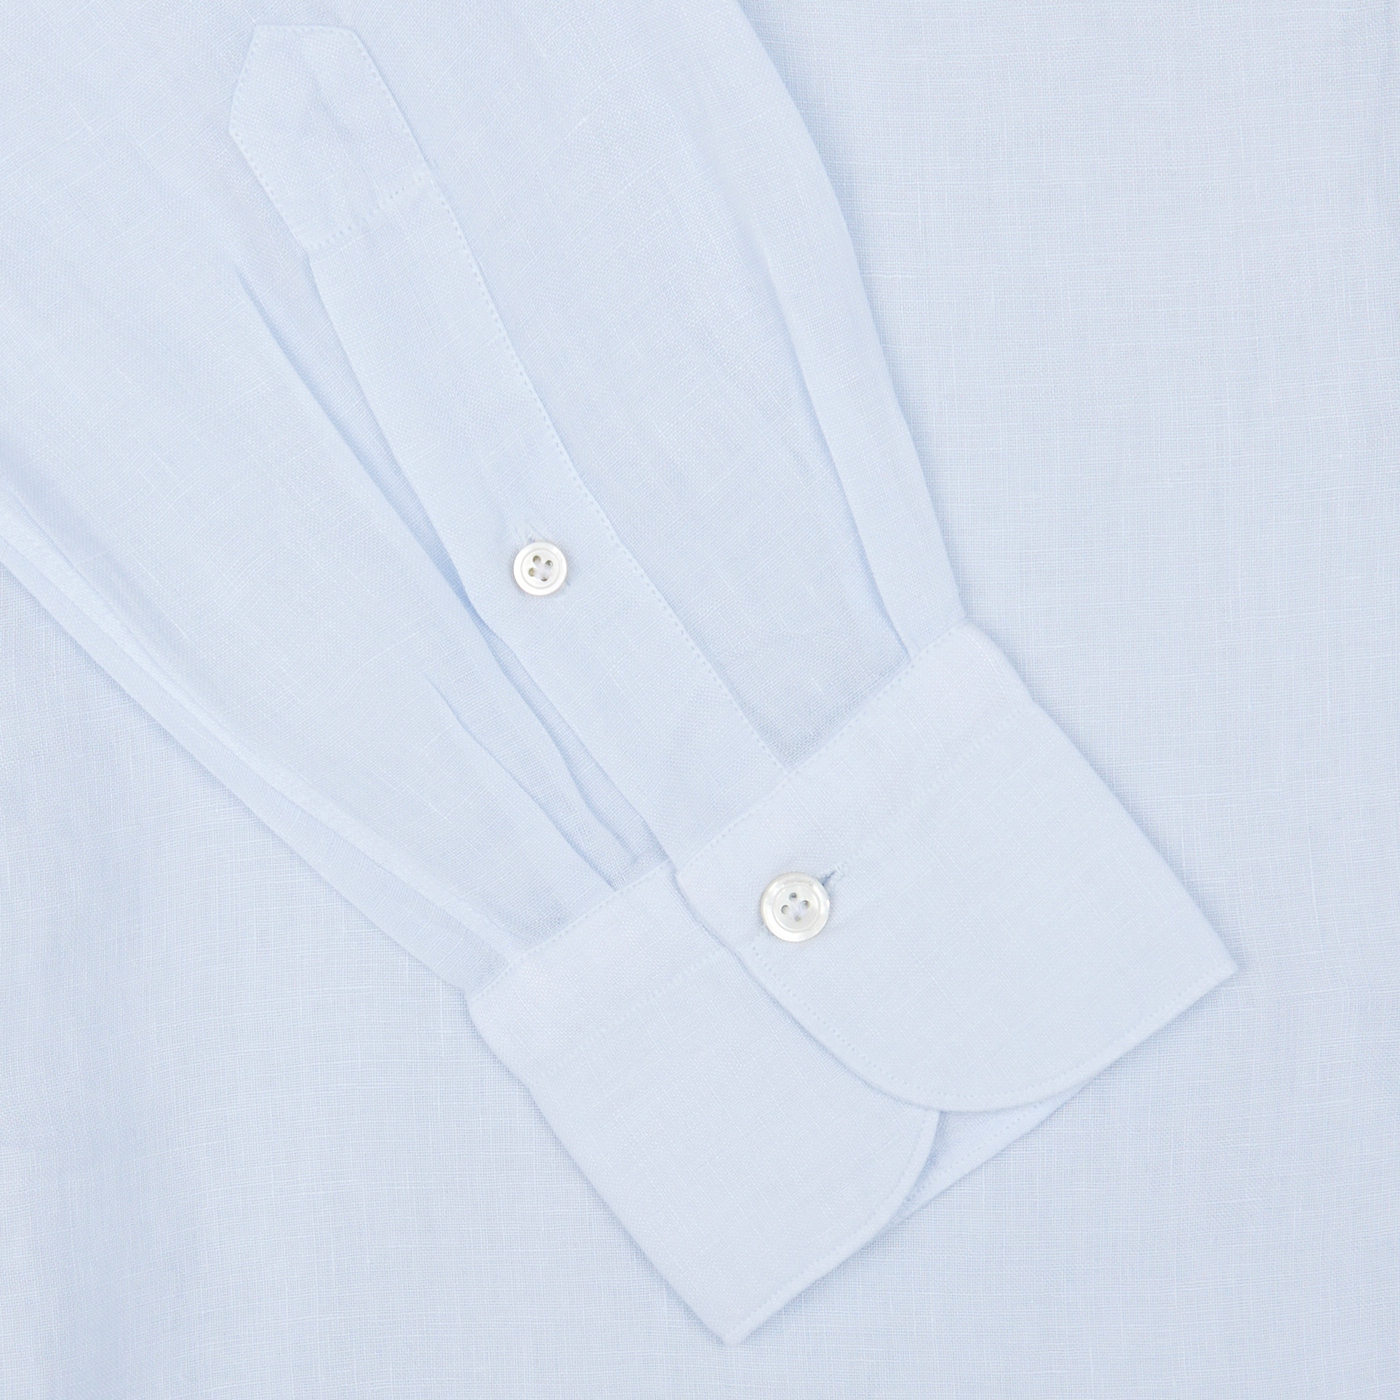 Handmade light blue pure linen Finamore casual shirt cuff with buttons.